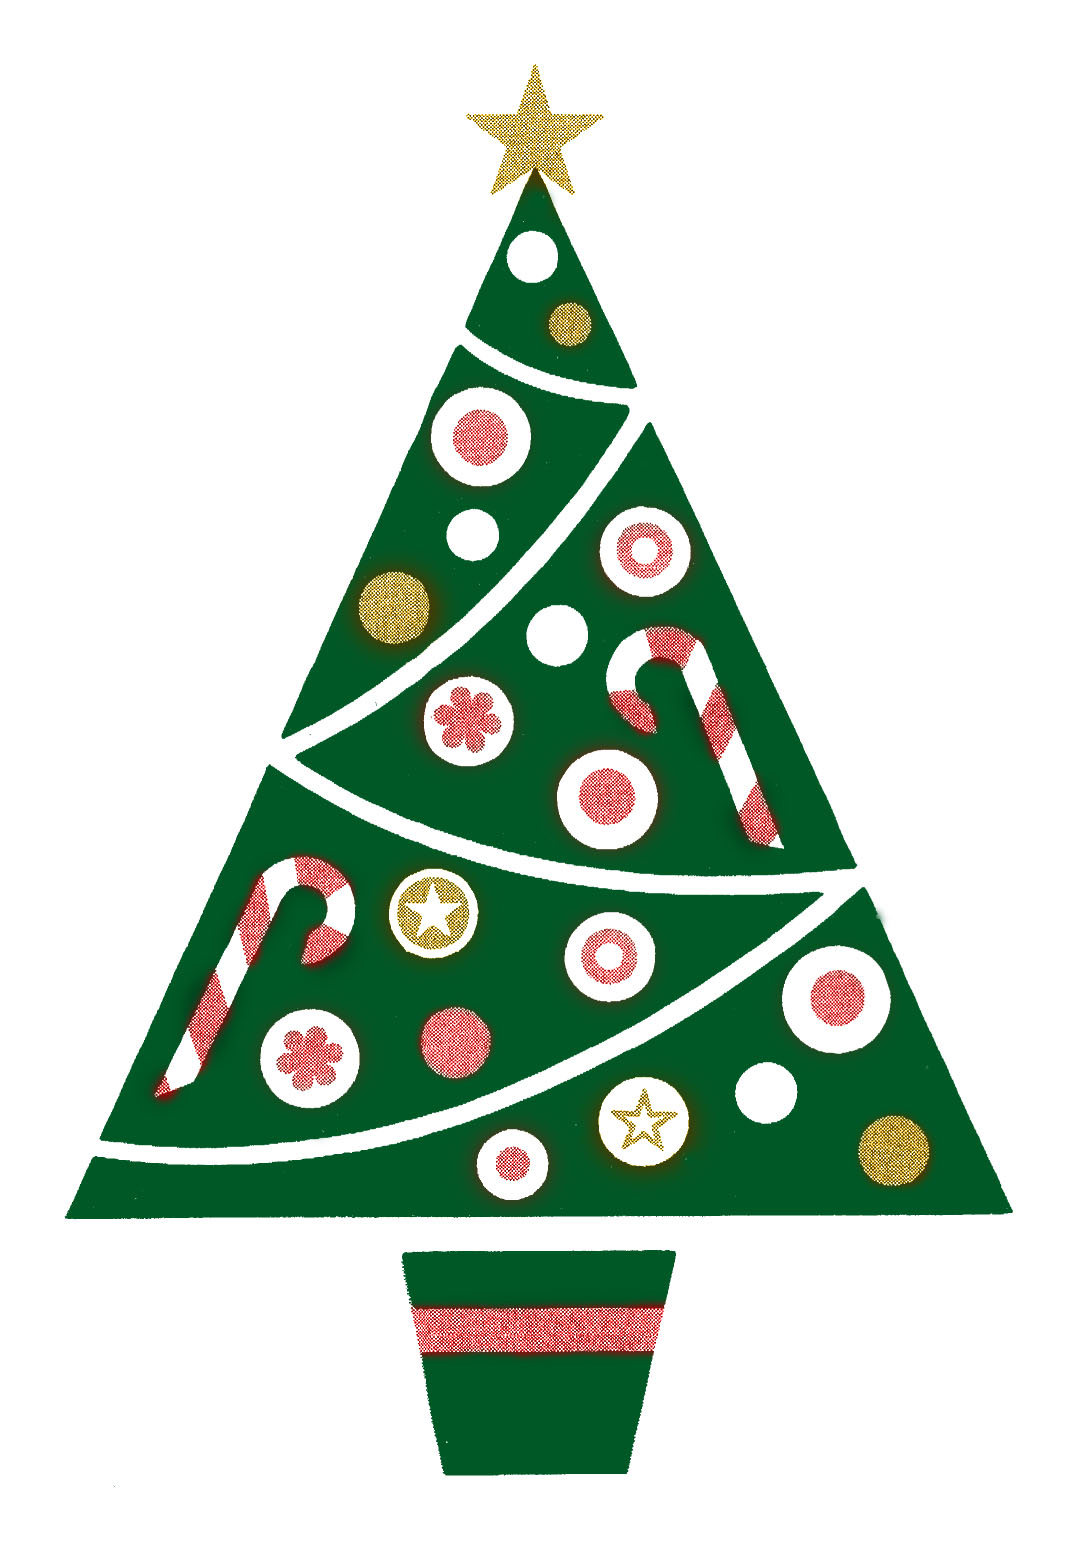 Retro Clip Art - Fun and Funky Christmas Tree - The Graphics Fairy